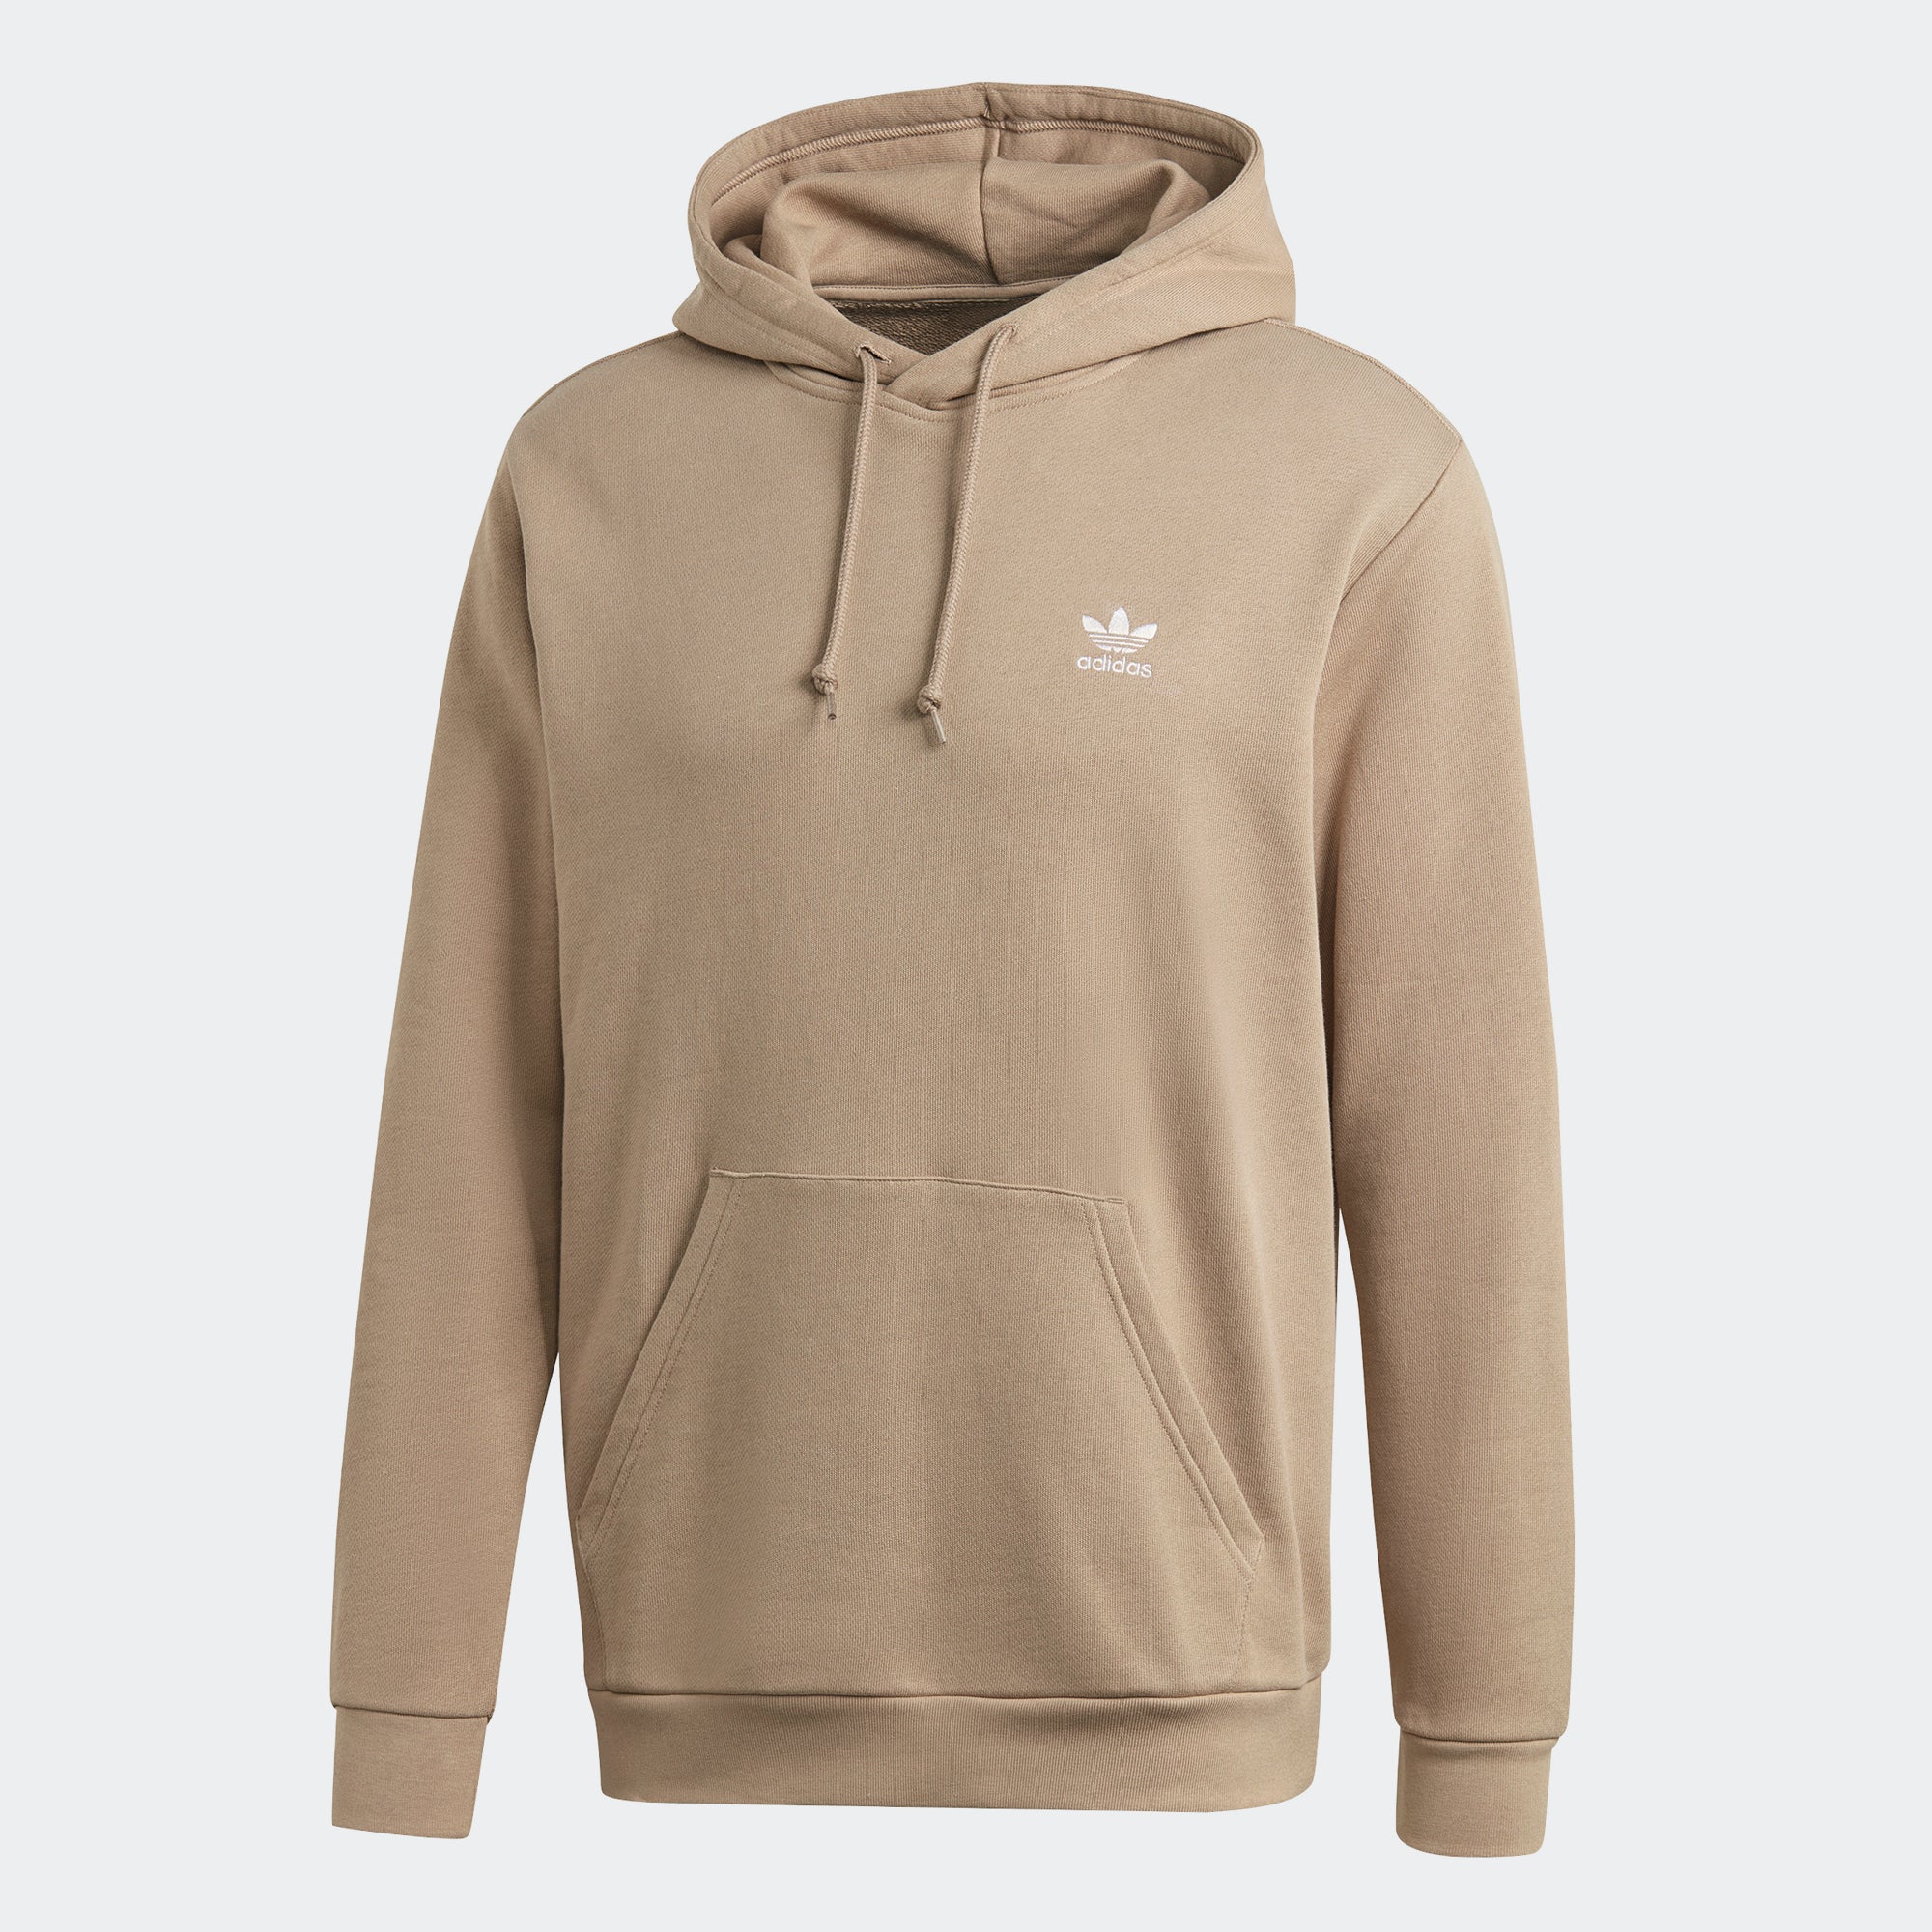 adidas trefoil hoodie khaki